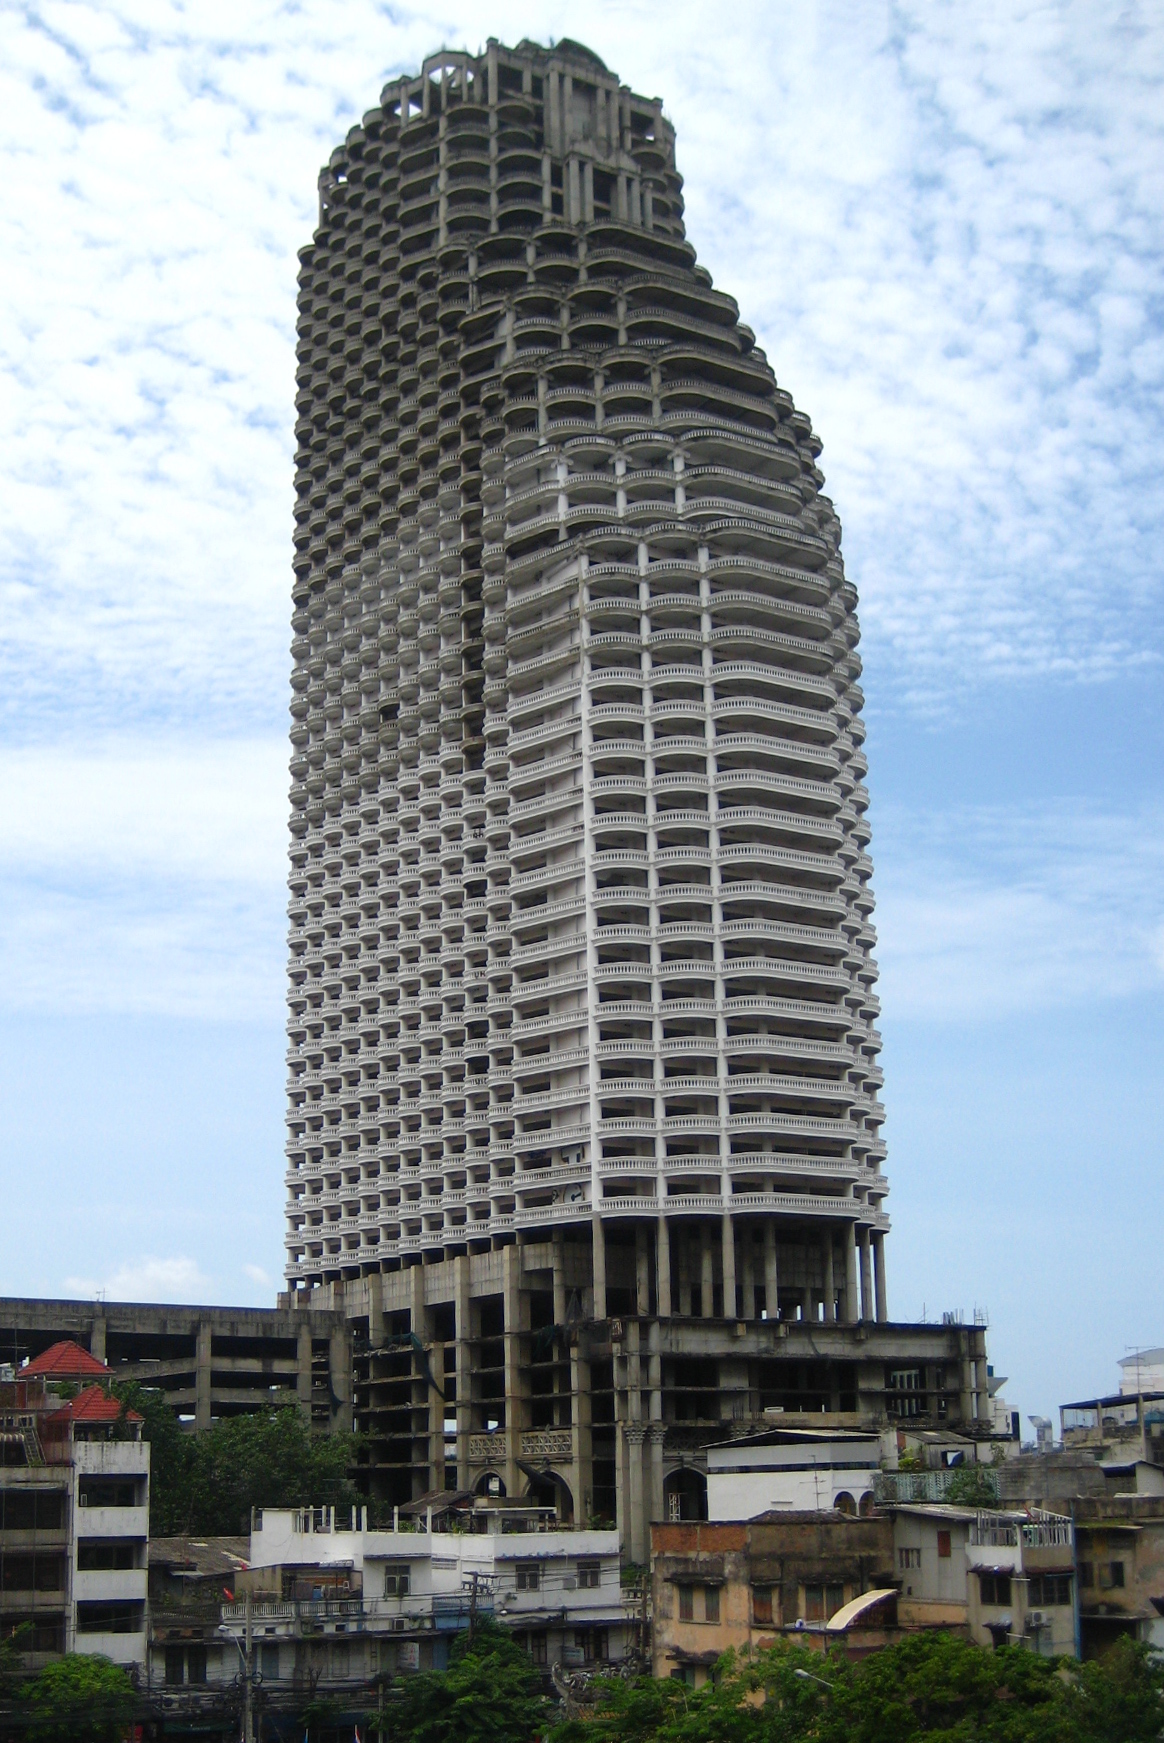 Sathorn Unique Tower - Wikipedia
